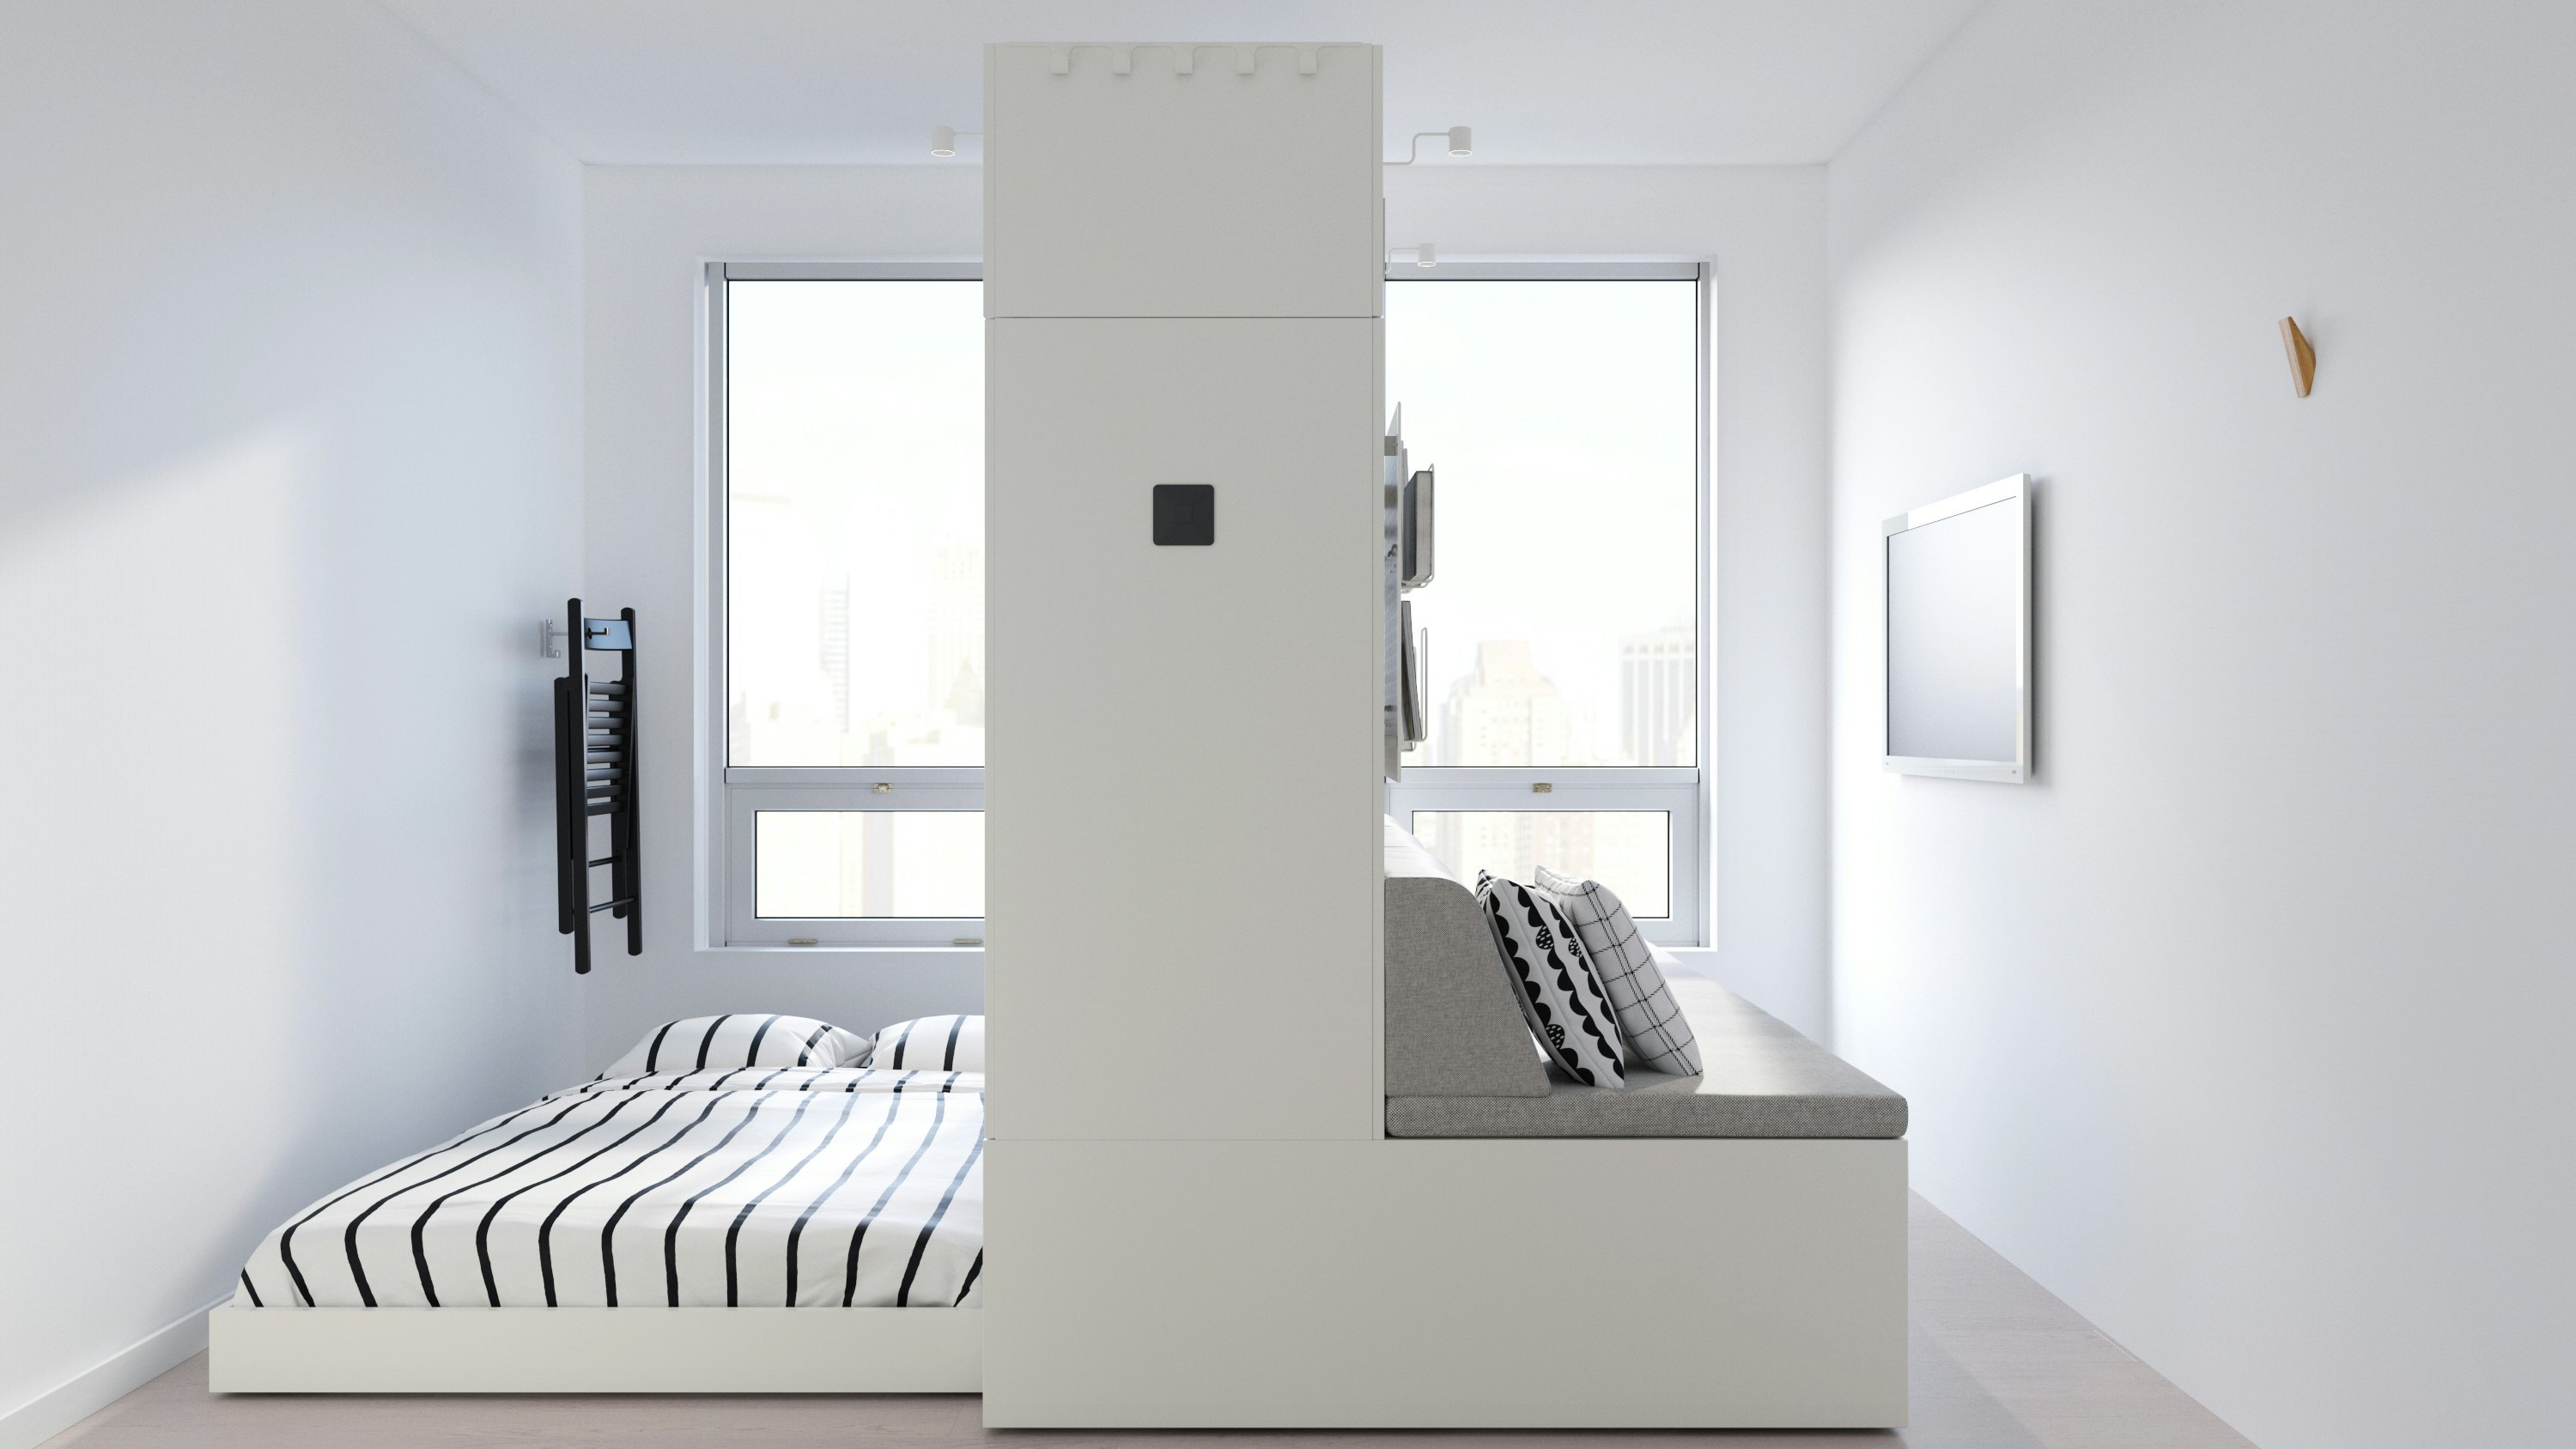 Ikea S Rognan Robotic Furniture Turns Small Spaces Into Multi